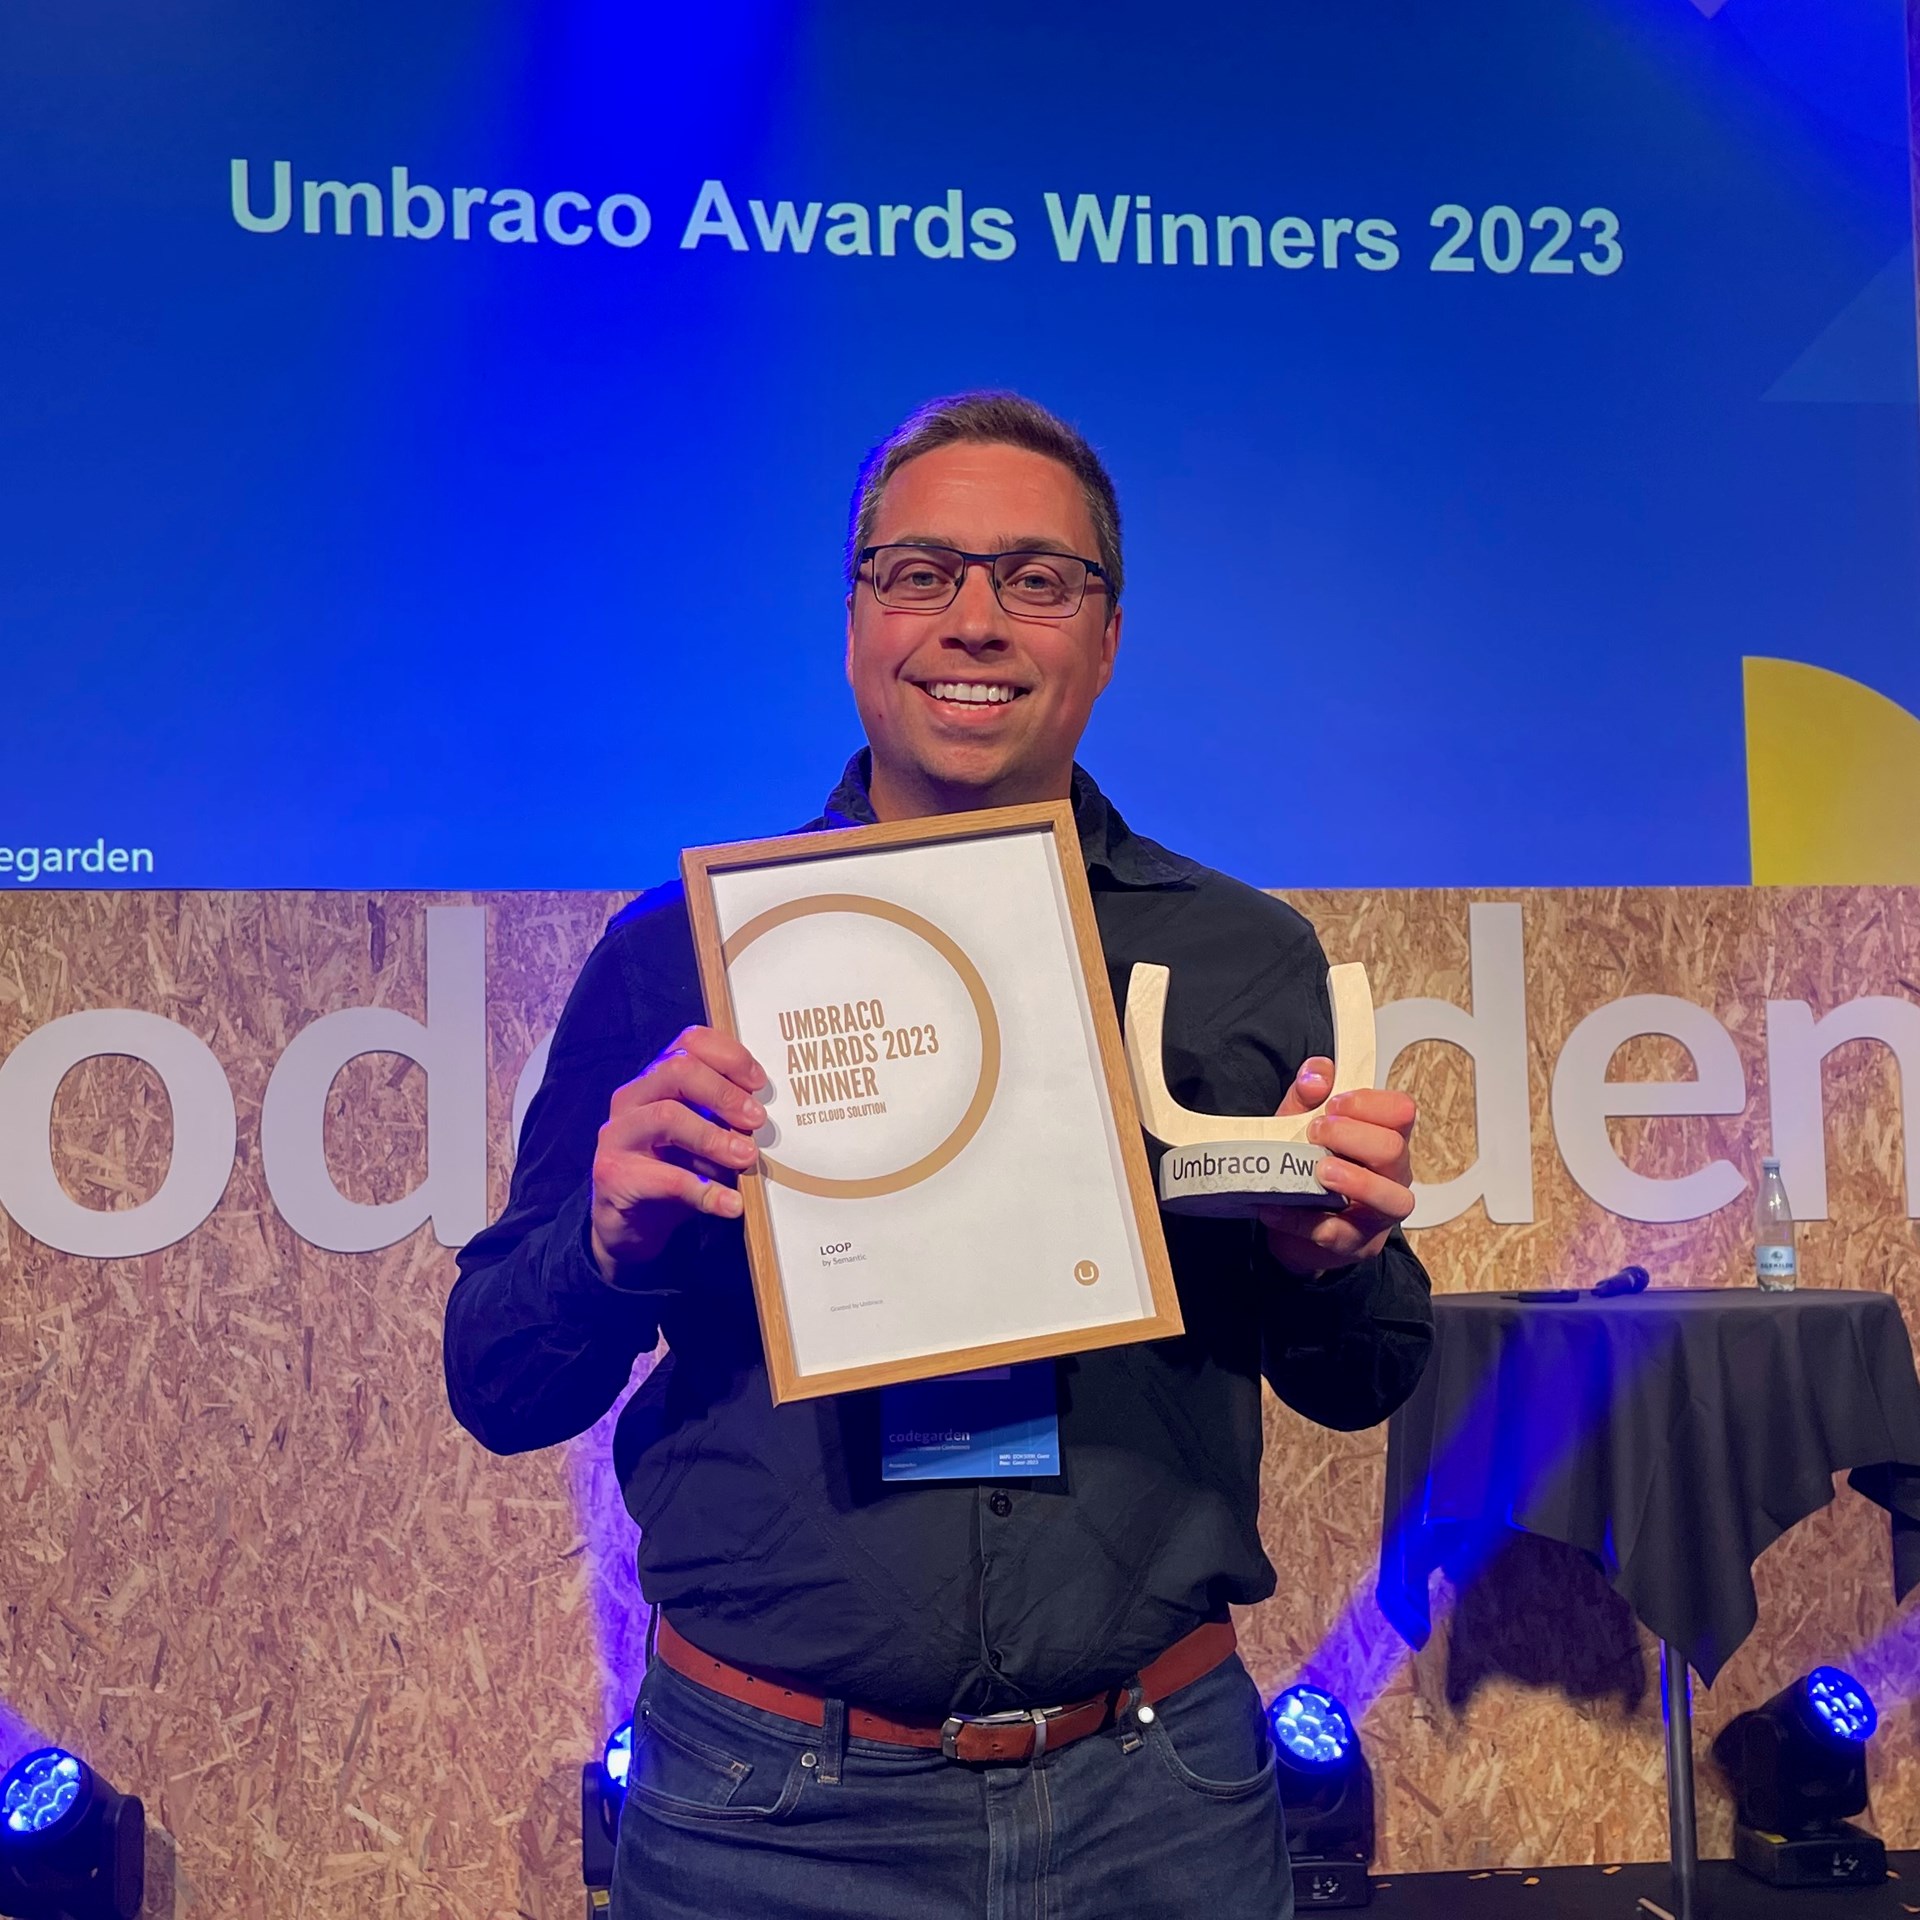 Umbraco Awards 2023 Winner - picking up our award for LOOP at Codegarden